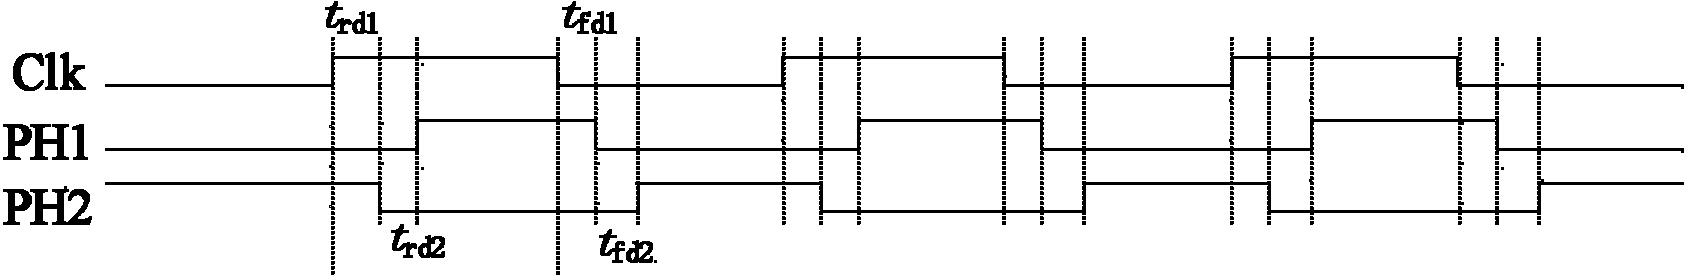 Non-overlapping clock generation circuit